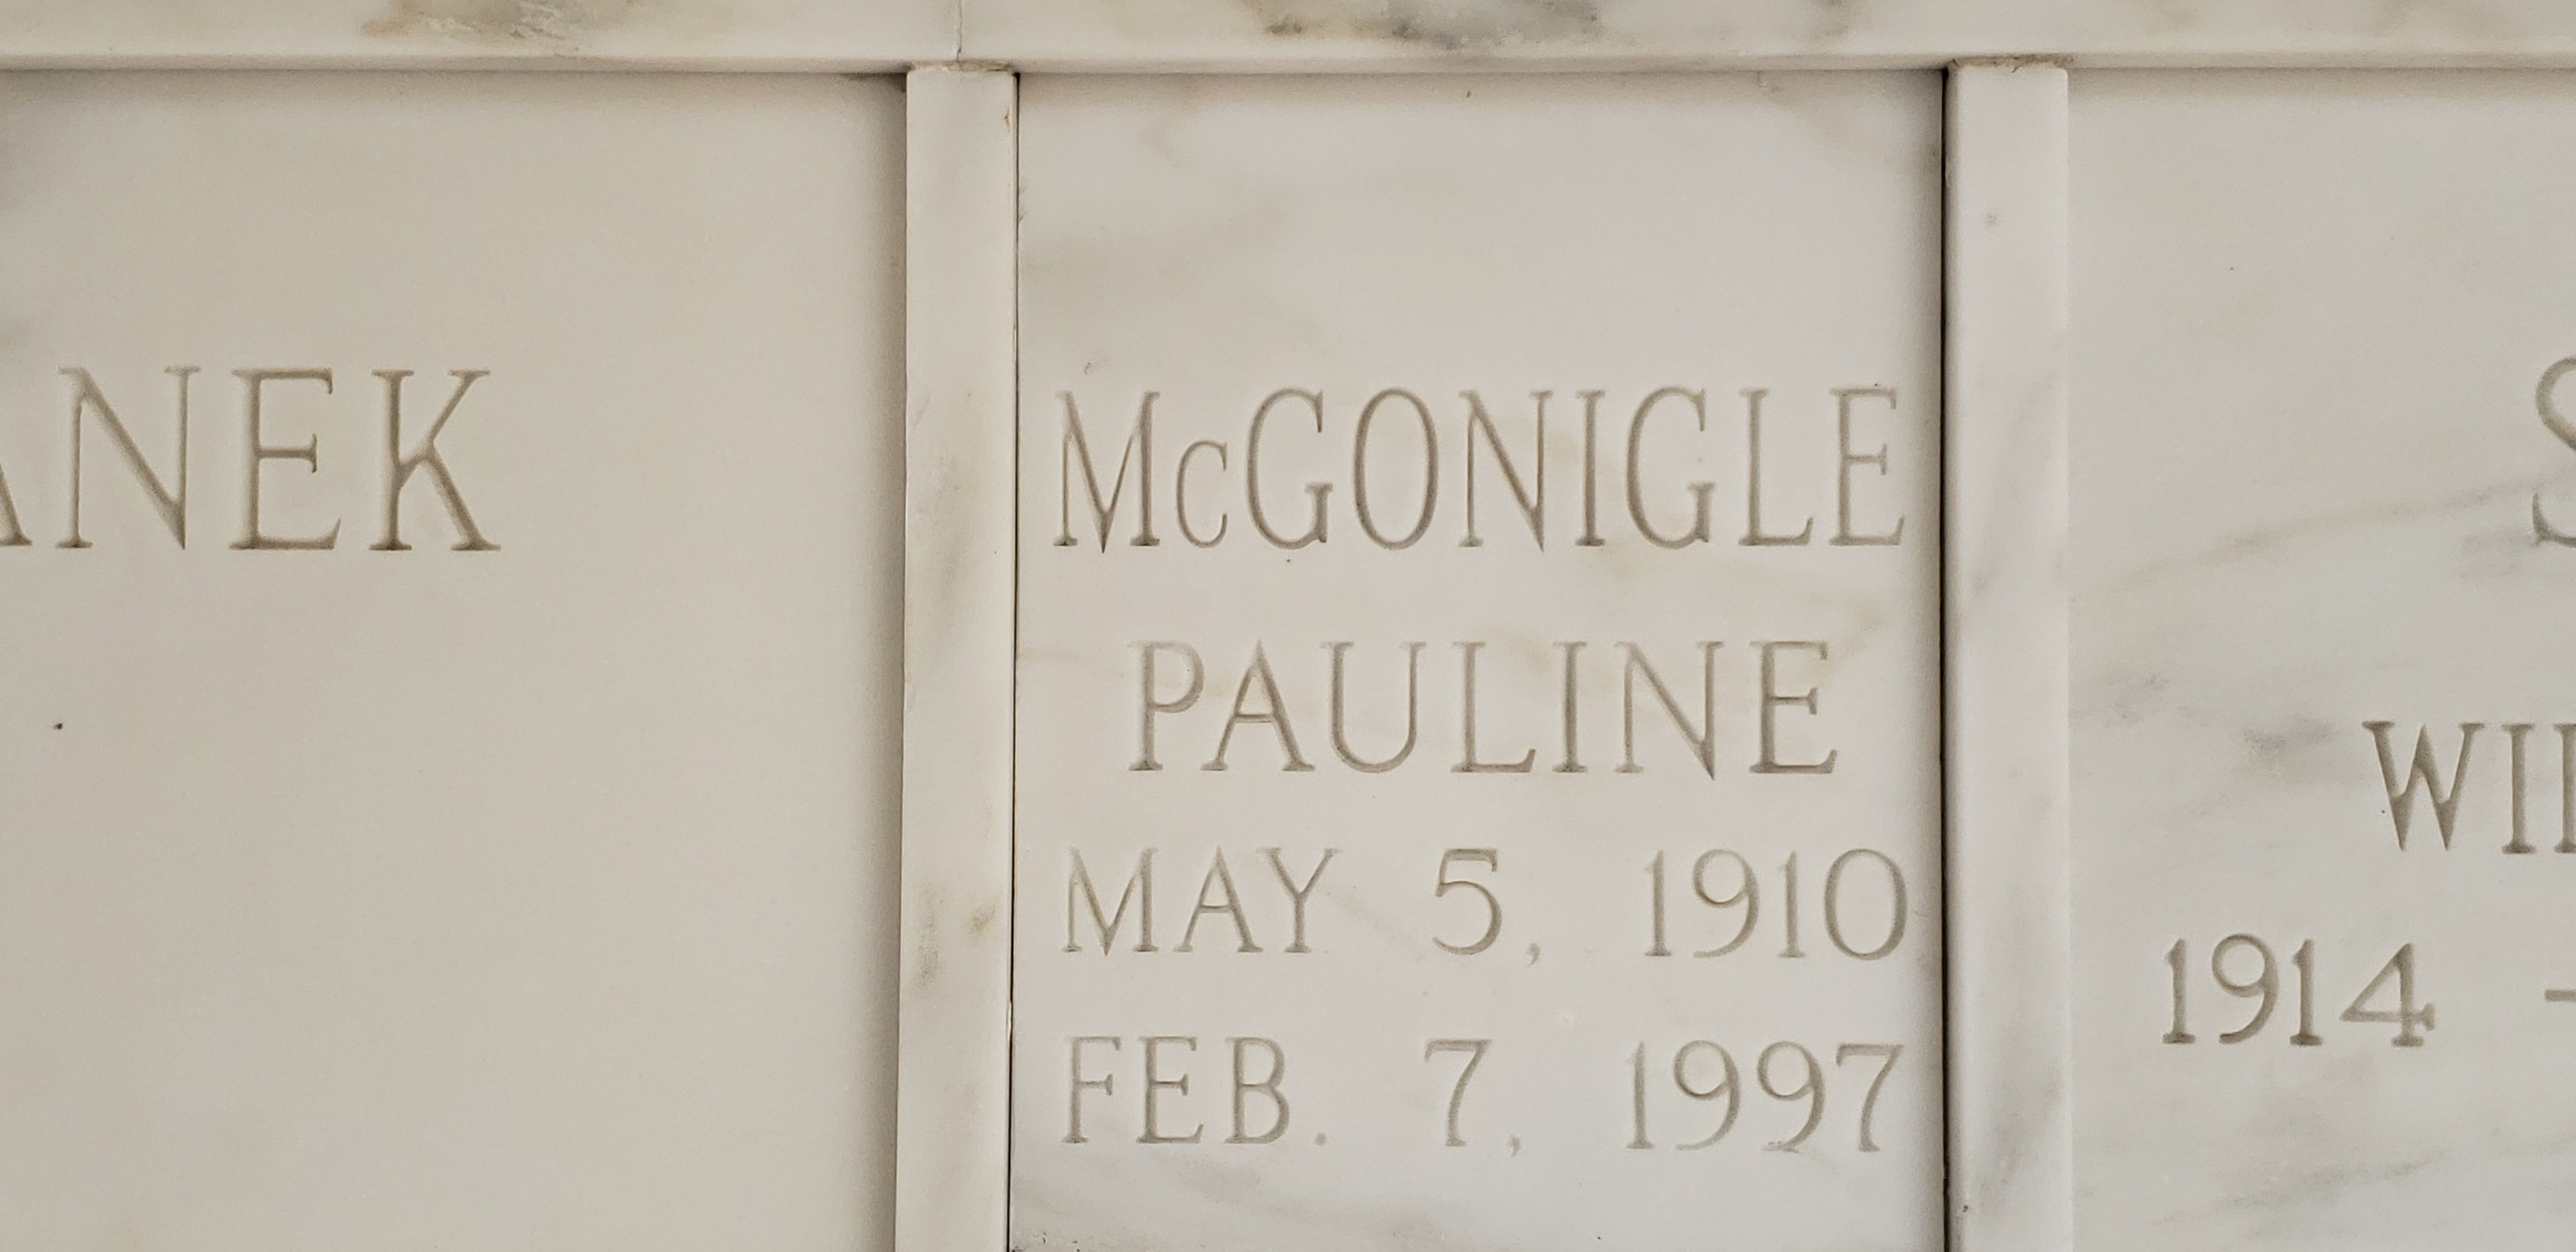 Pauline McGonigle